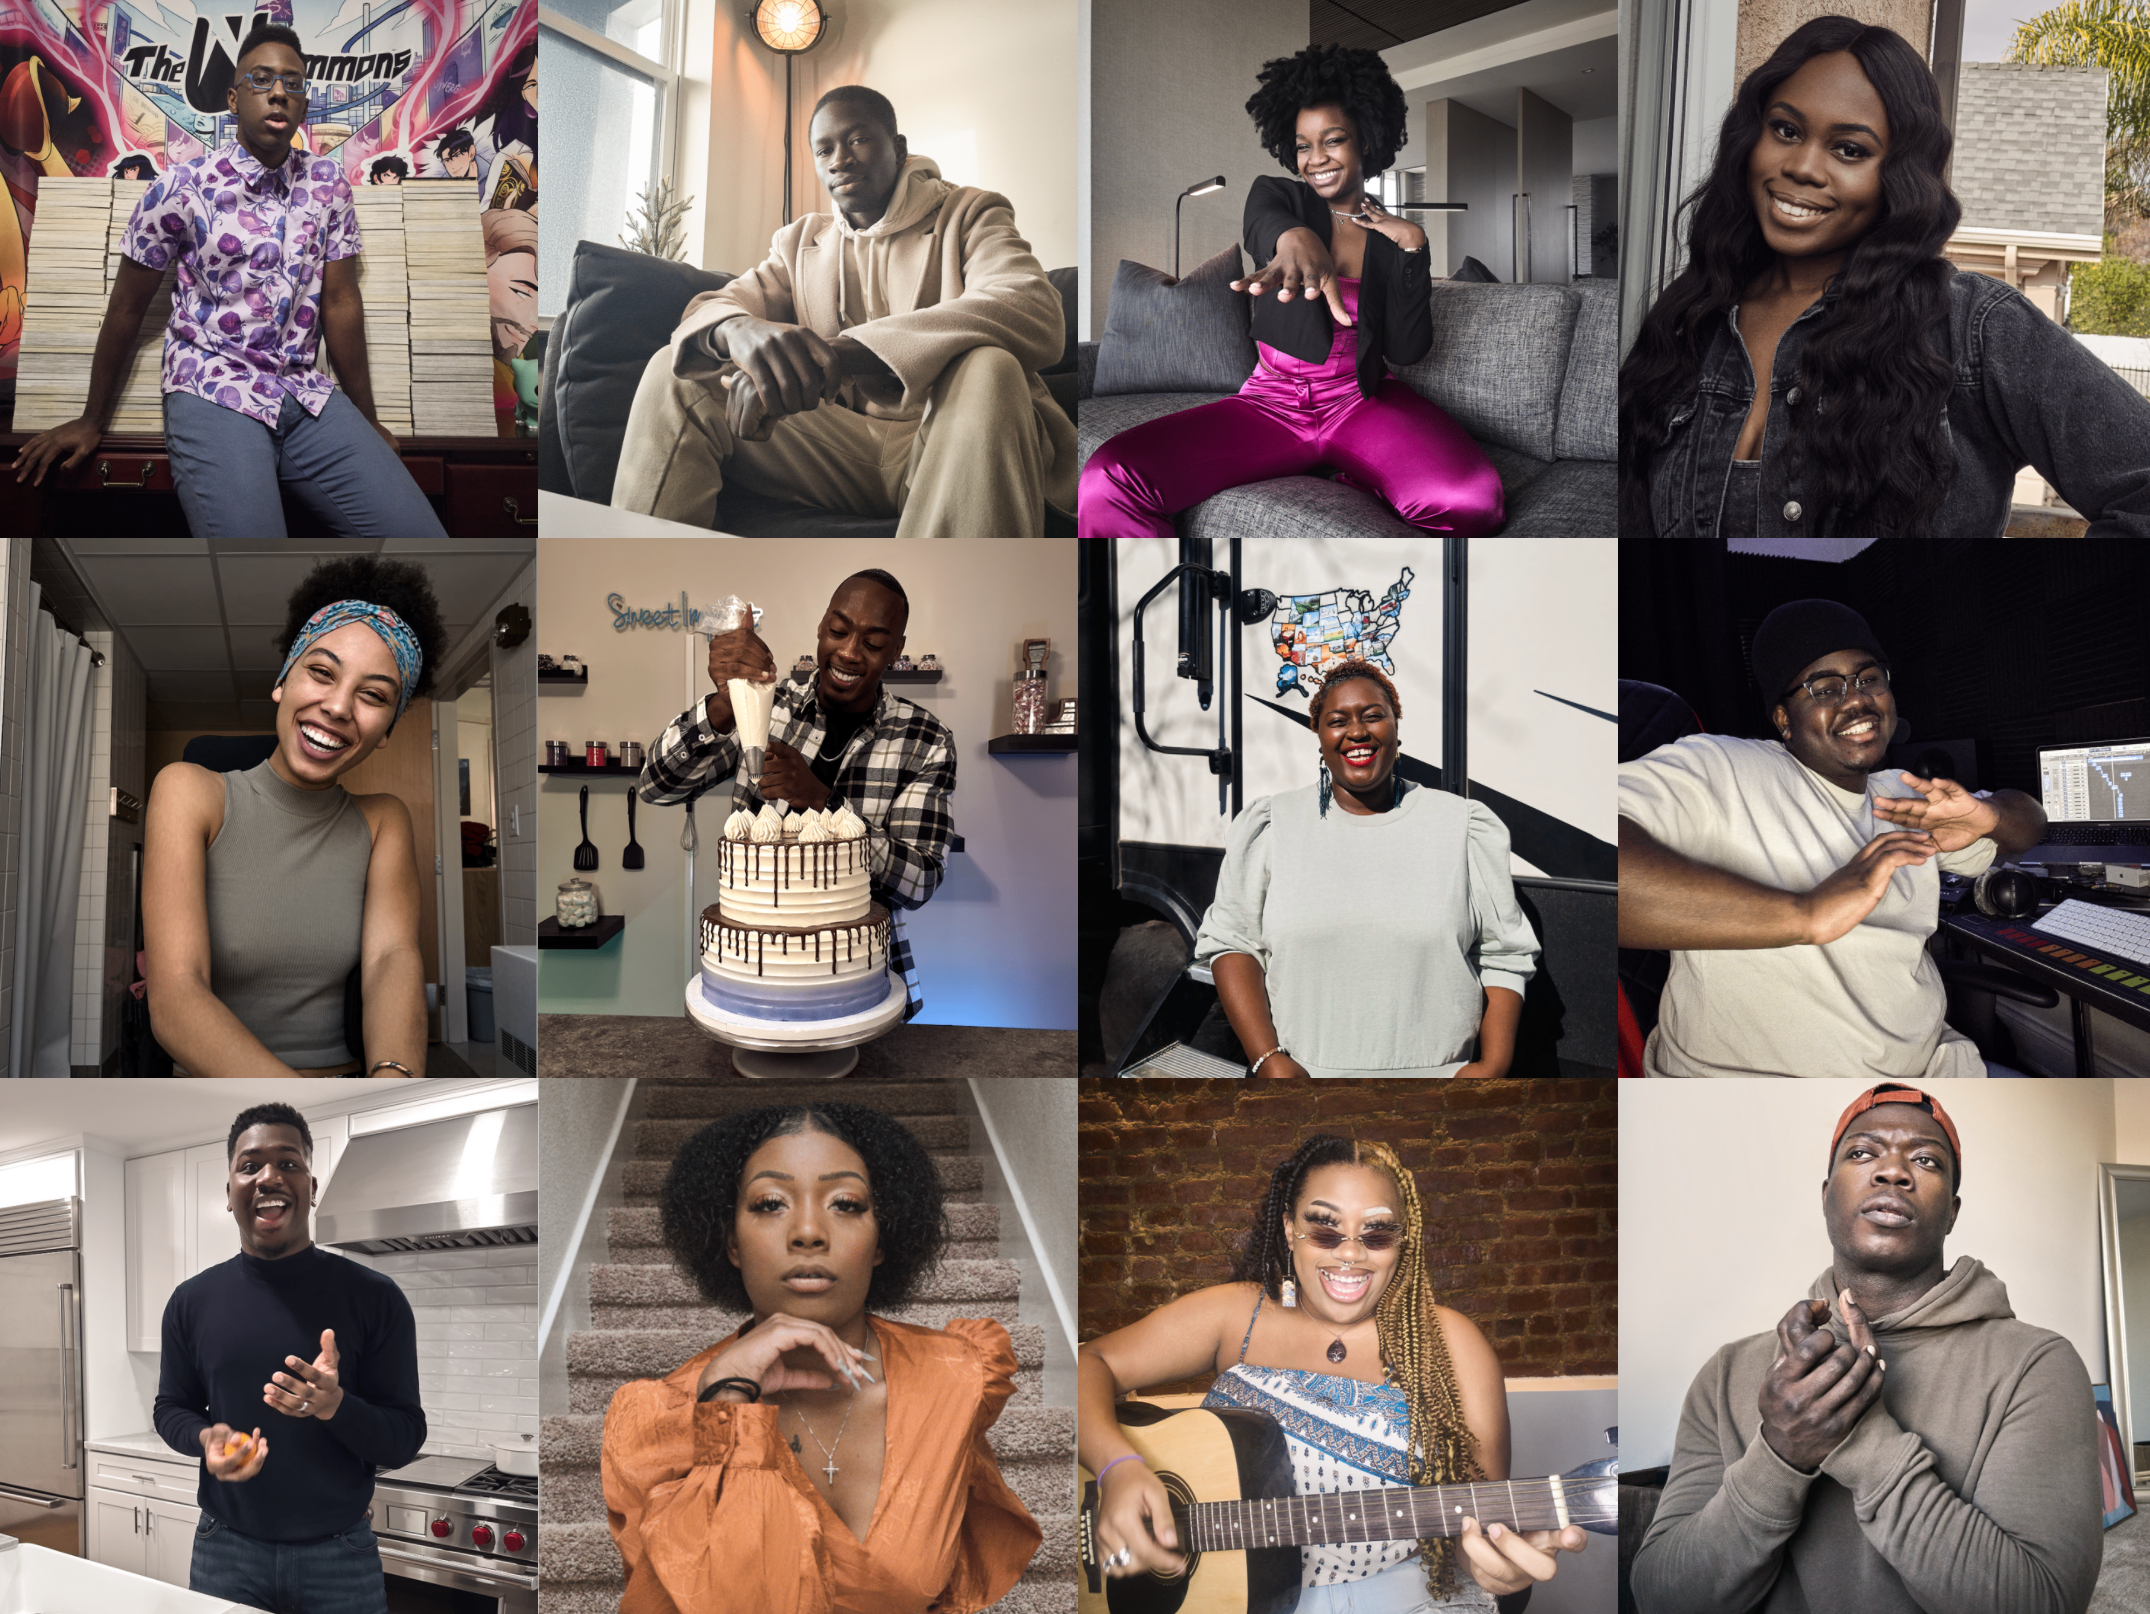 TikTok Kicks Off Black History Month With Recognition of Black TikTok Trailblazers